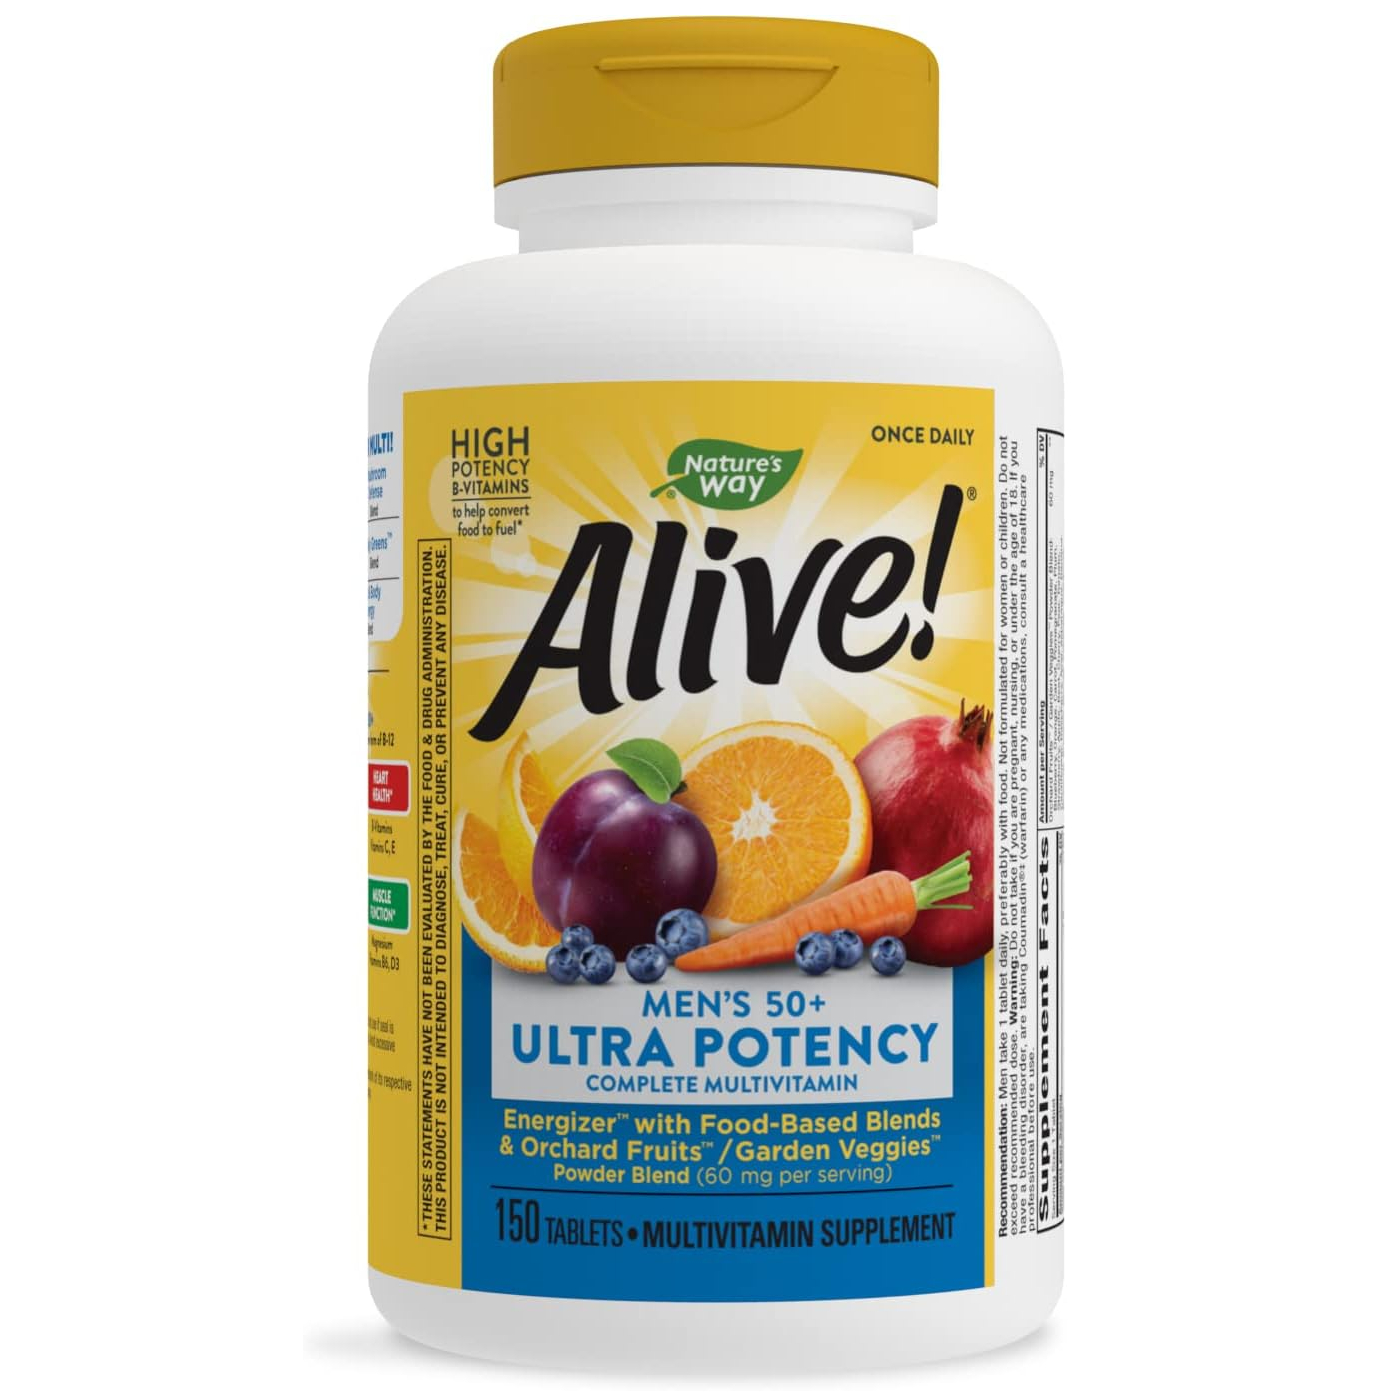 Мультивитамины для мужчин 50+ Nature's Way Alive! Ultra Potency Complete Gluten-Free, 150 таблеток полноценный мультивитамин ultra potency 60 таблеток men s 50 nature s way